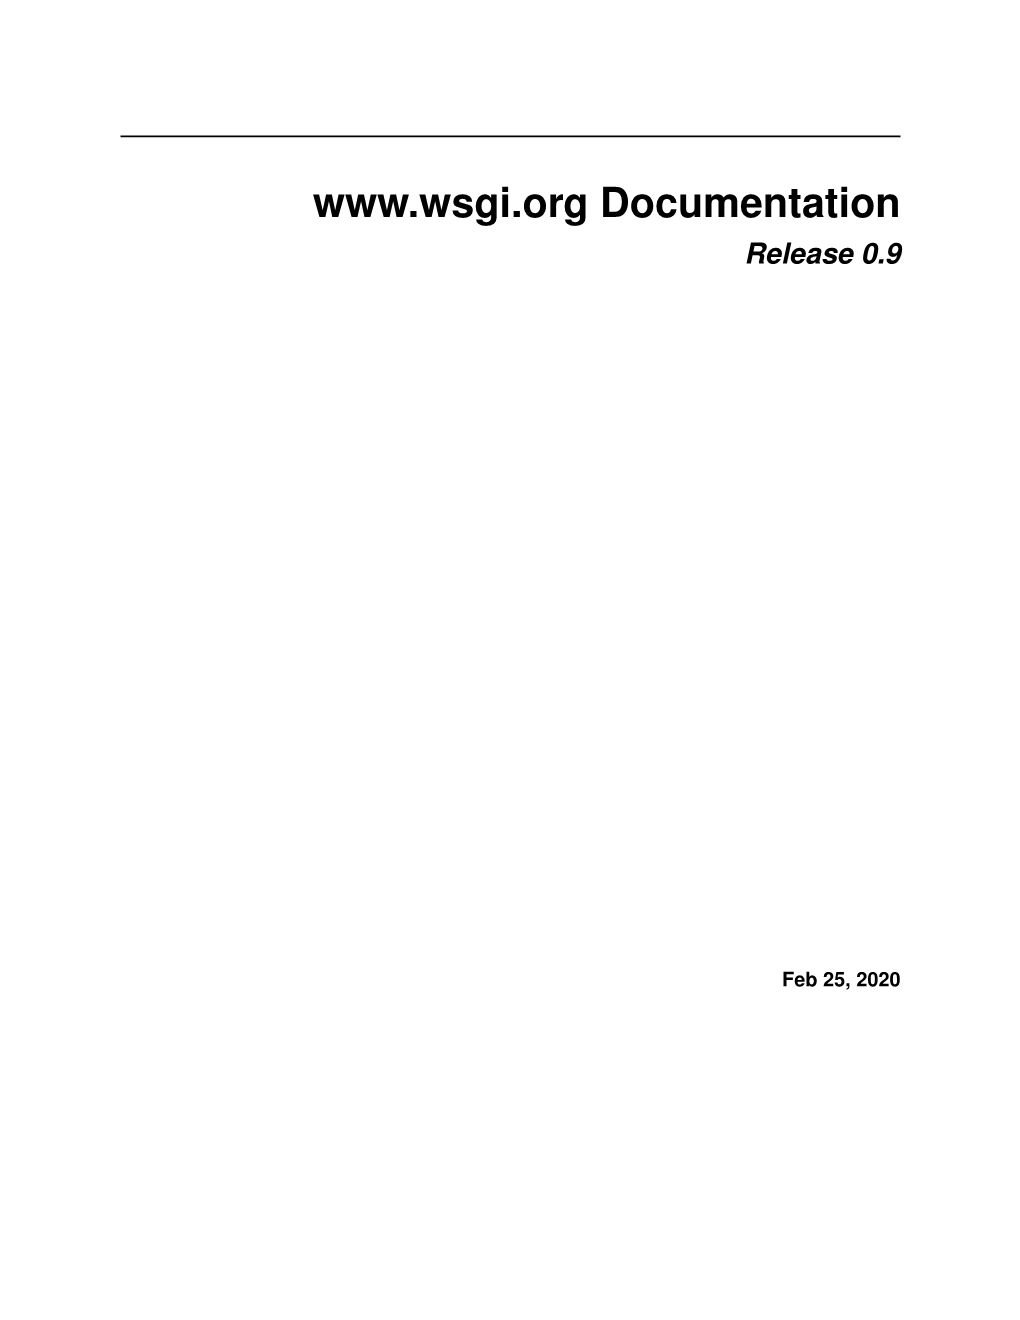 Documentation Release 0.9